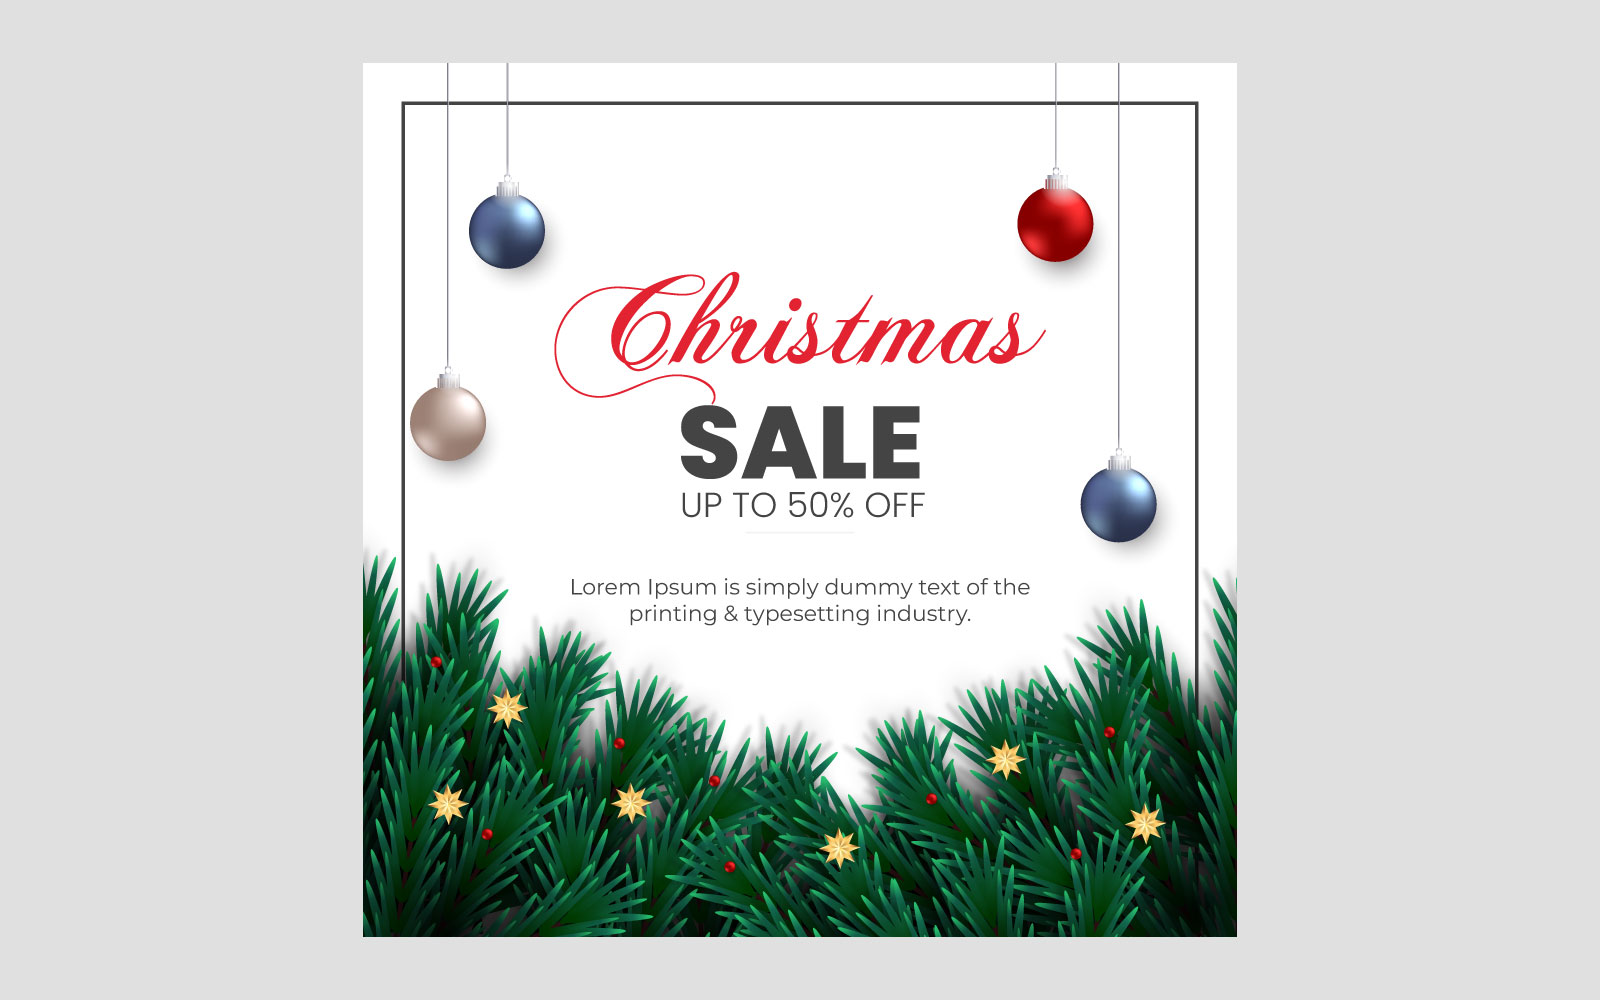 Christmas sale post decoration with christmas balls pine branch and star